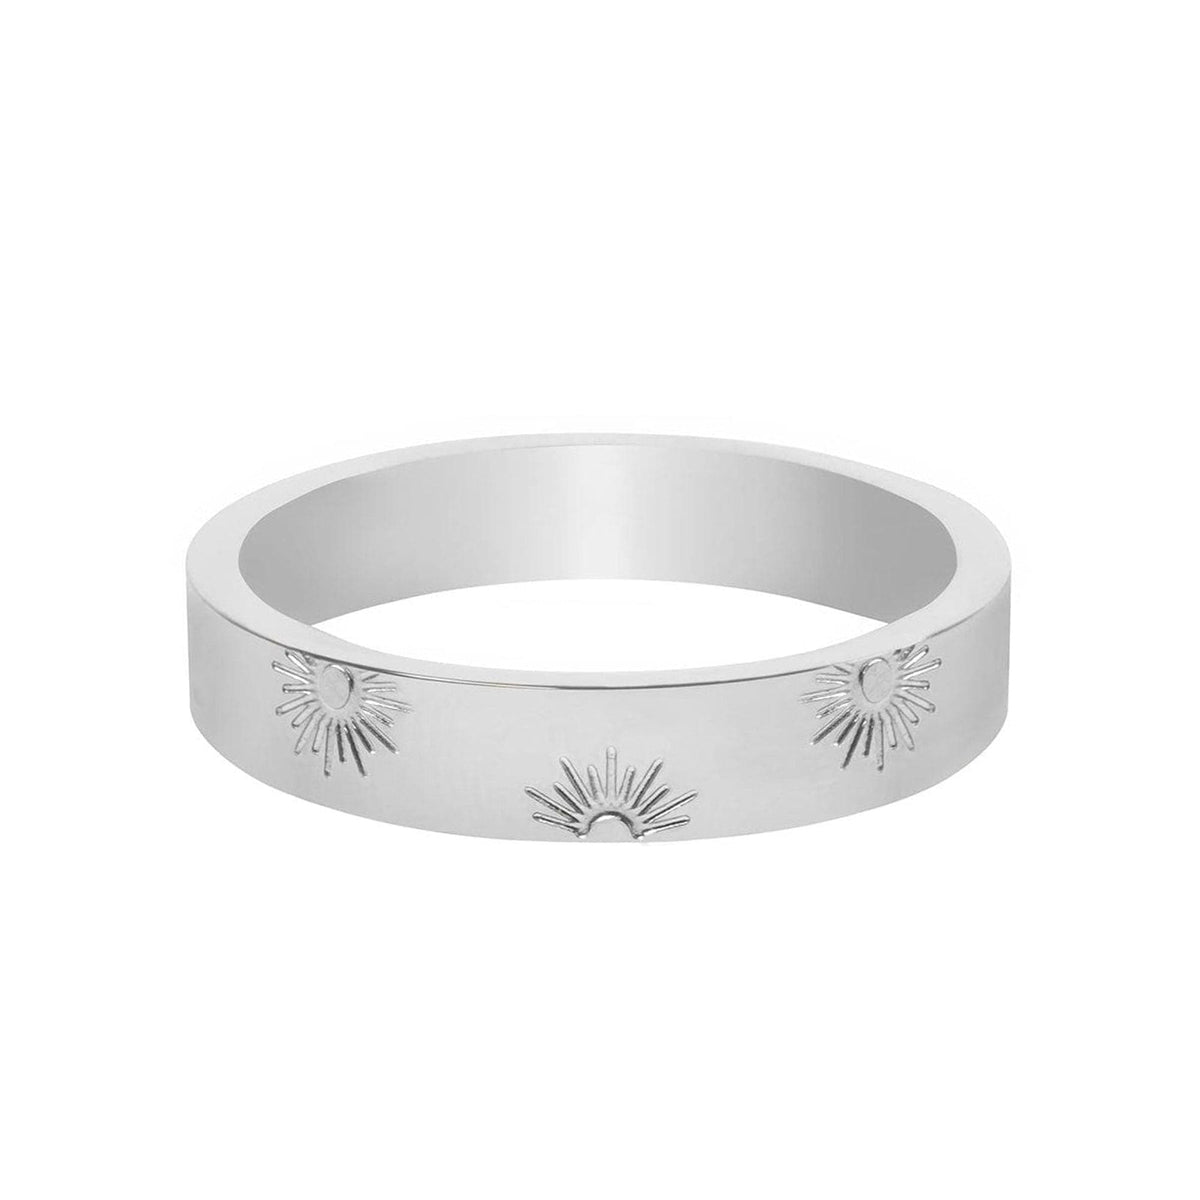 BohoMoon Stainless Steel Sunbeam Ring Silver / US 4 / UK H / EUR 46 / (xxsmall)